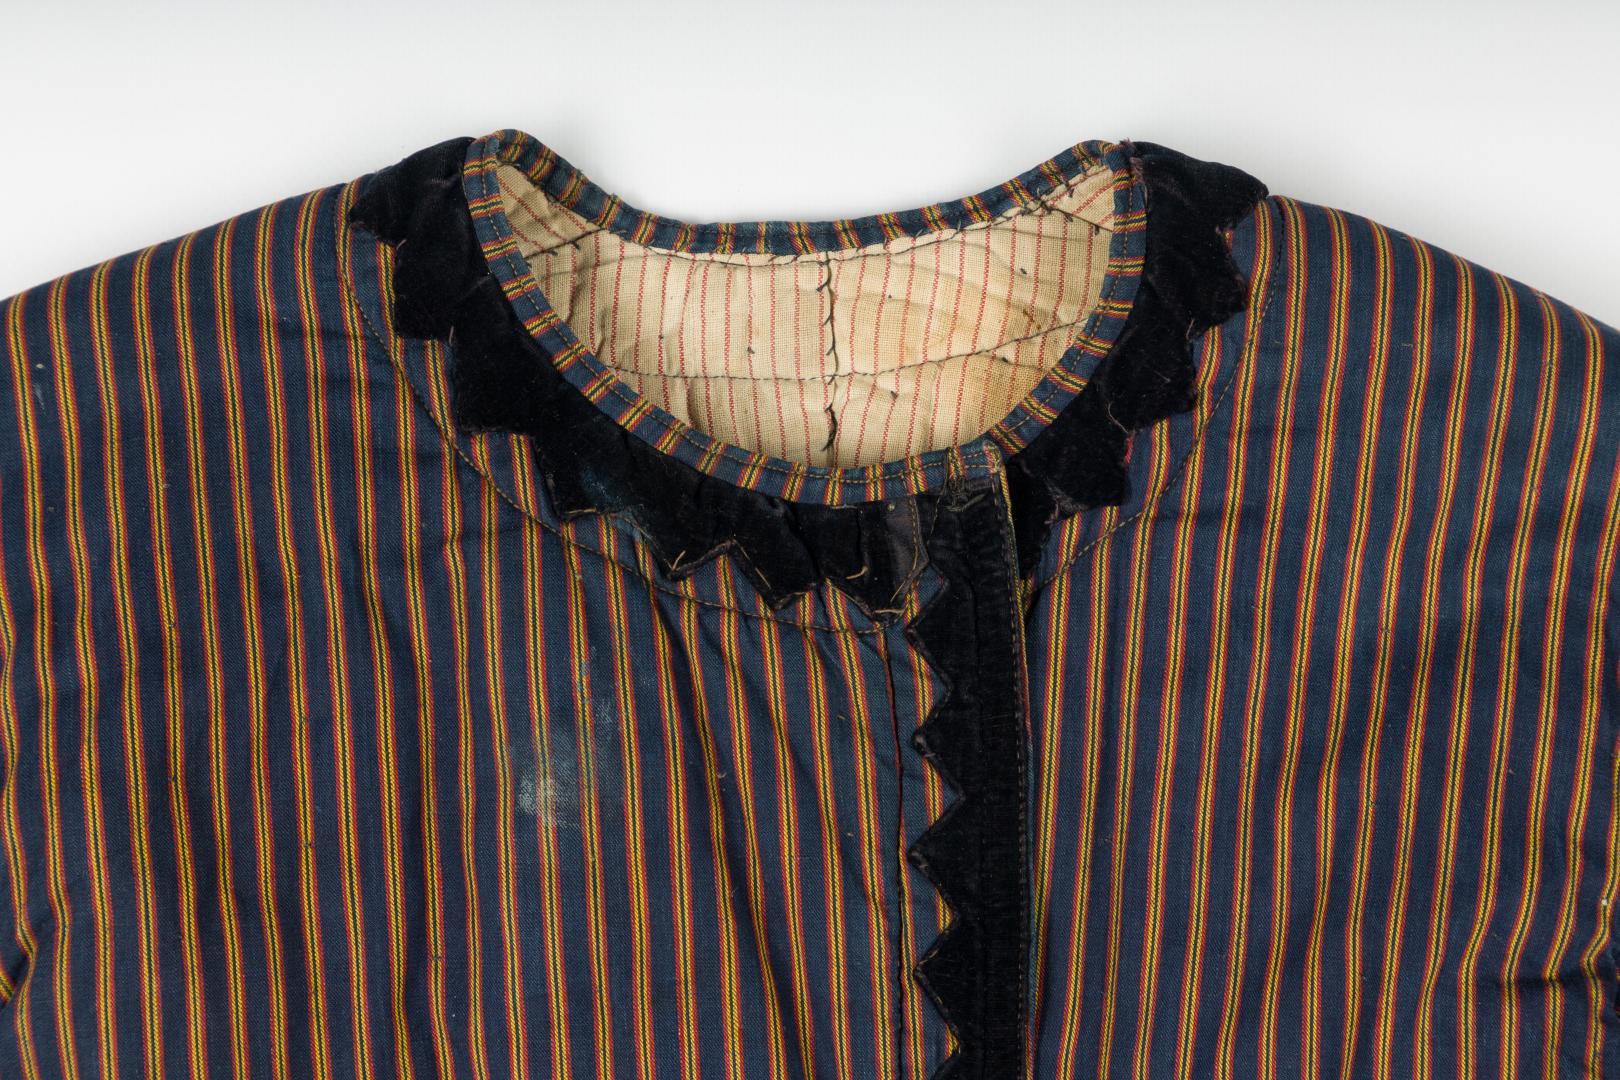 Yupka (striped women's overcoat)